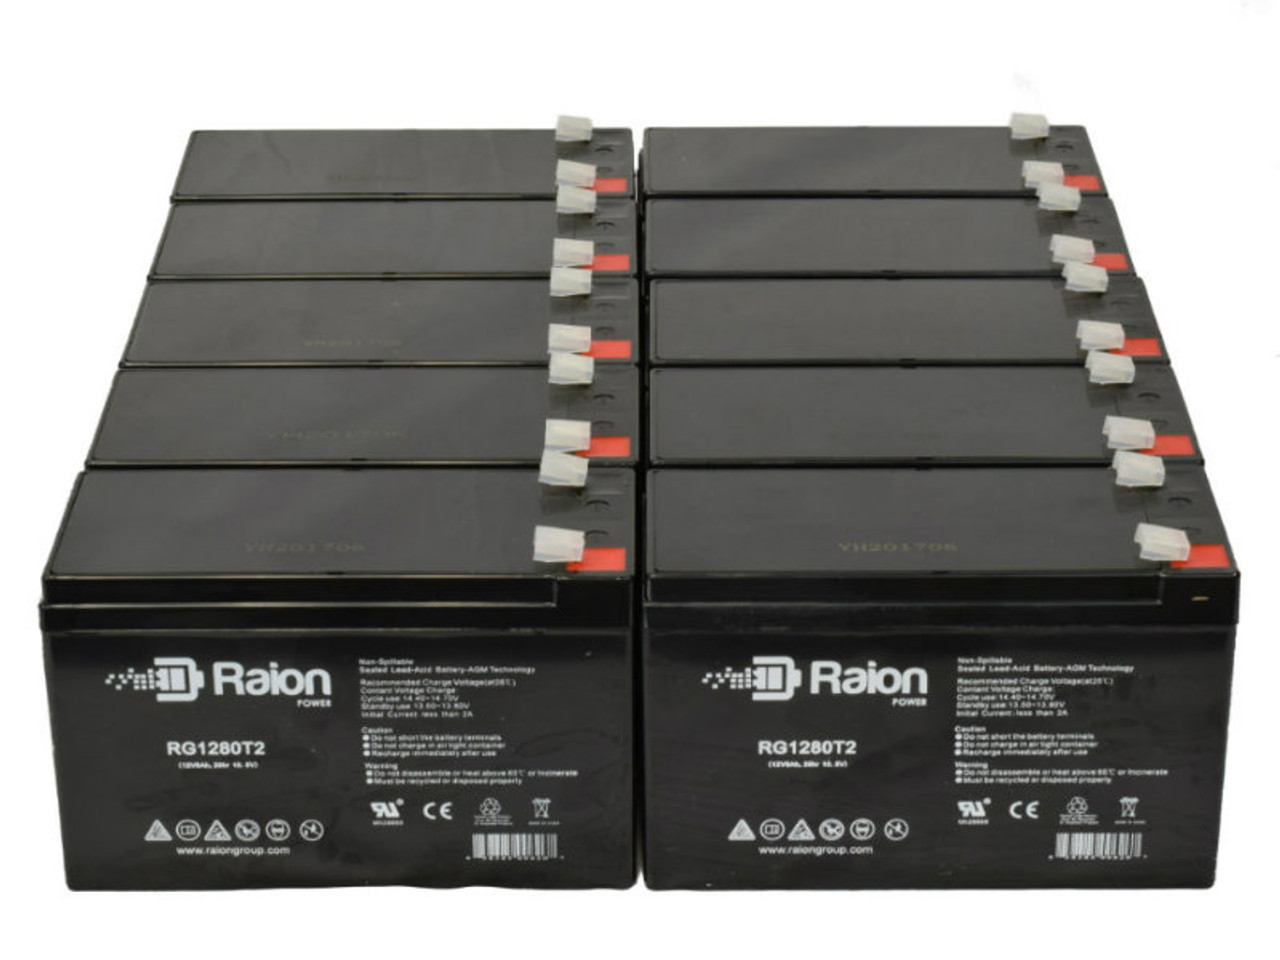 Raion Power Replacement 12V 8Ah RG1280T1 Battery for Mortara ELI 350 ECG Recorder - 10 Pack